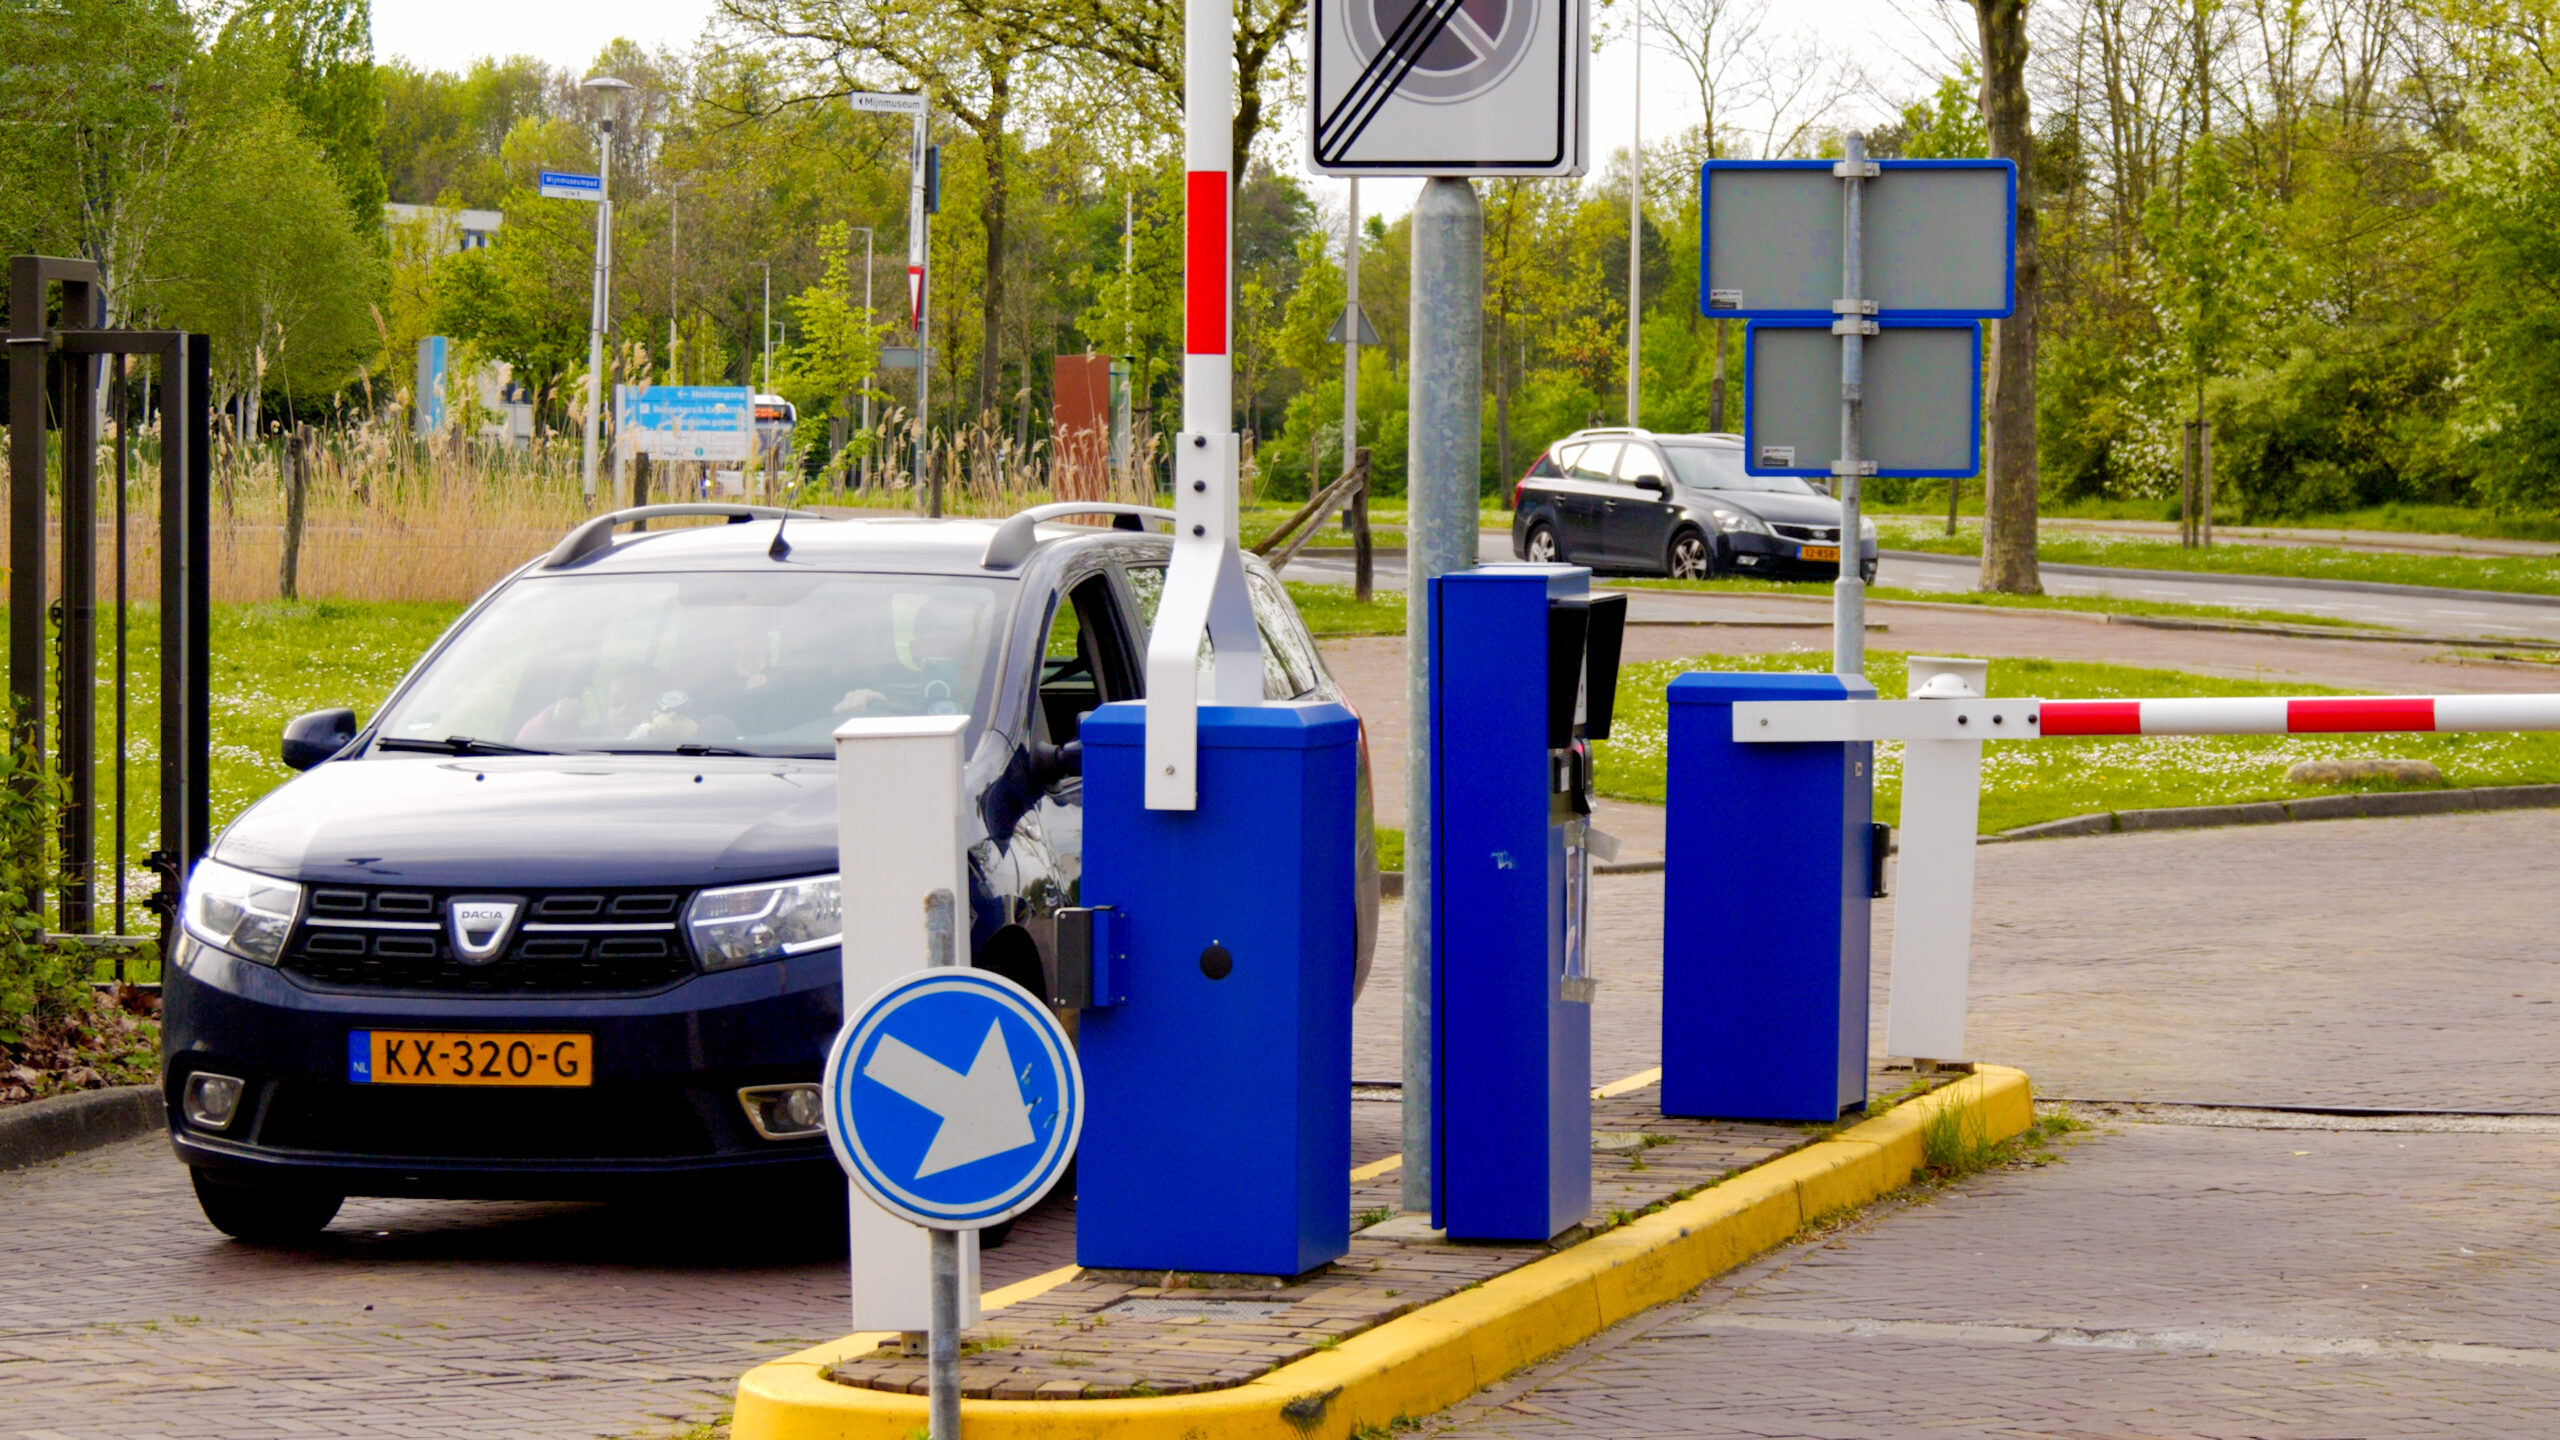 Engels: "Parking system with automated gates and ticket dispenser." Nederlands: "Parkeersysteem met geautomatiseerde poorten en kaartjesautomaat."